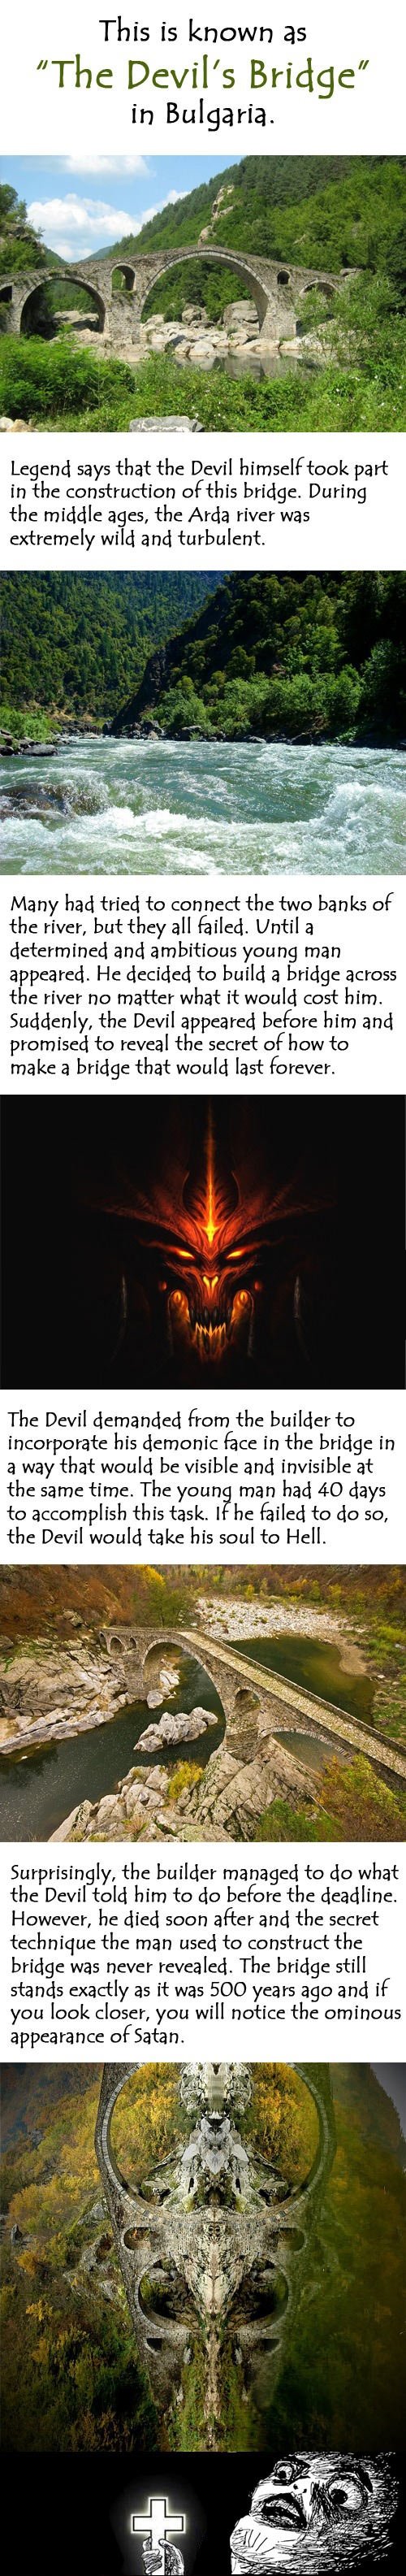 The Devils Bridge